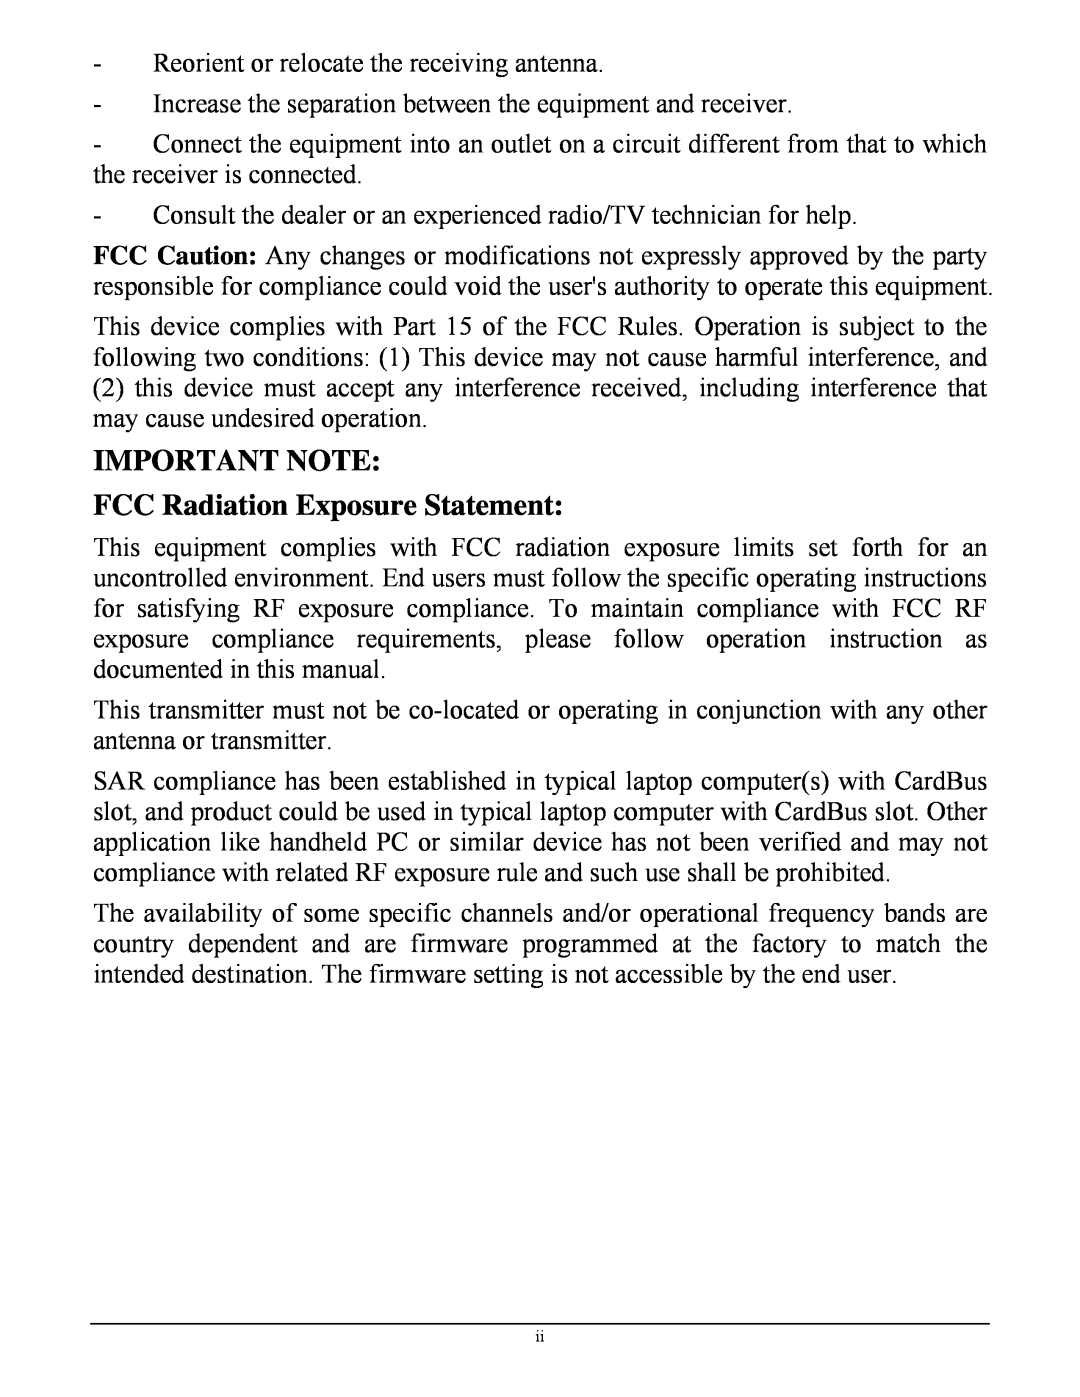 TRENDnet TEW623PI manual IMPORTANT NOTE FCC Radiation Exposure Statement 